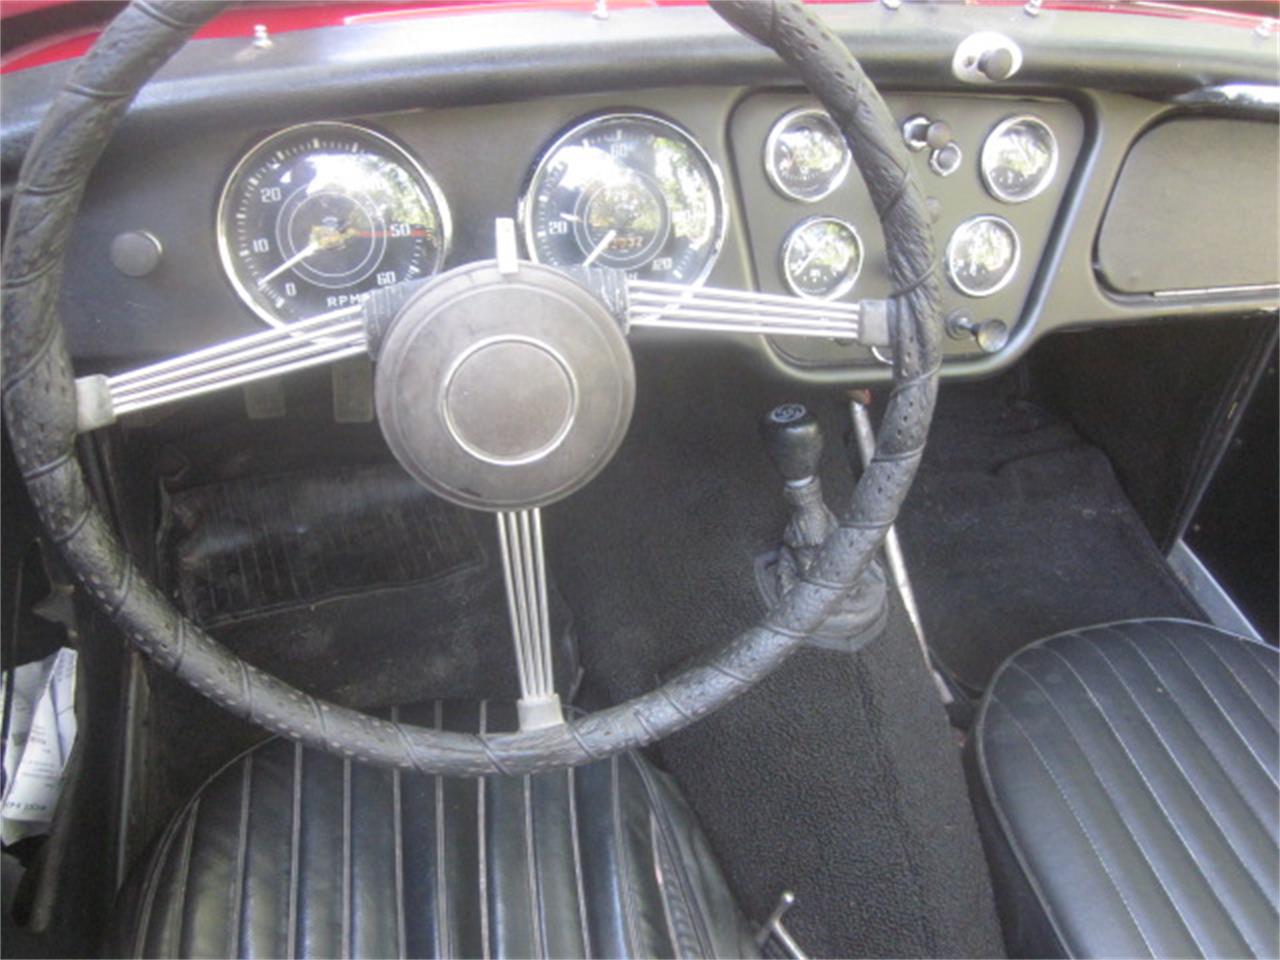 1959 Triumph TR3A for sale in Stratford, CT – photo 10